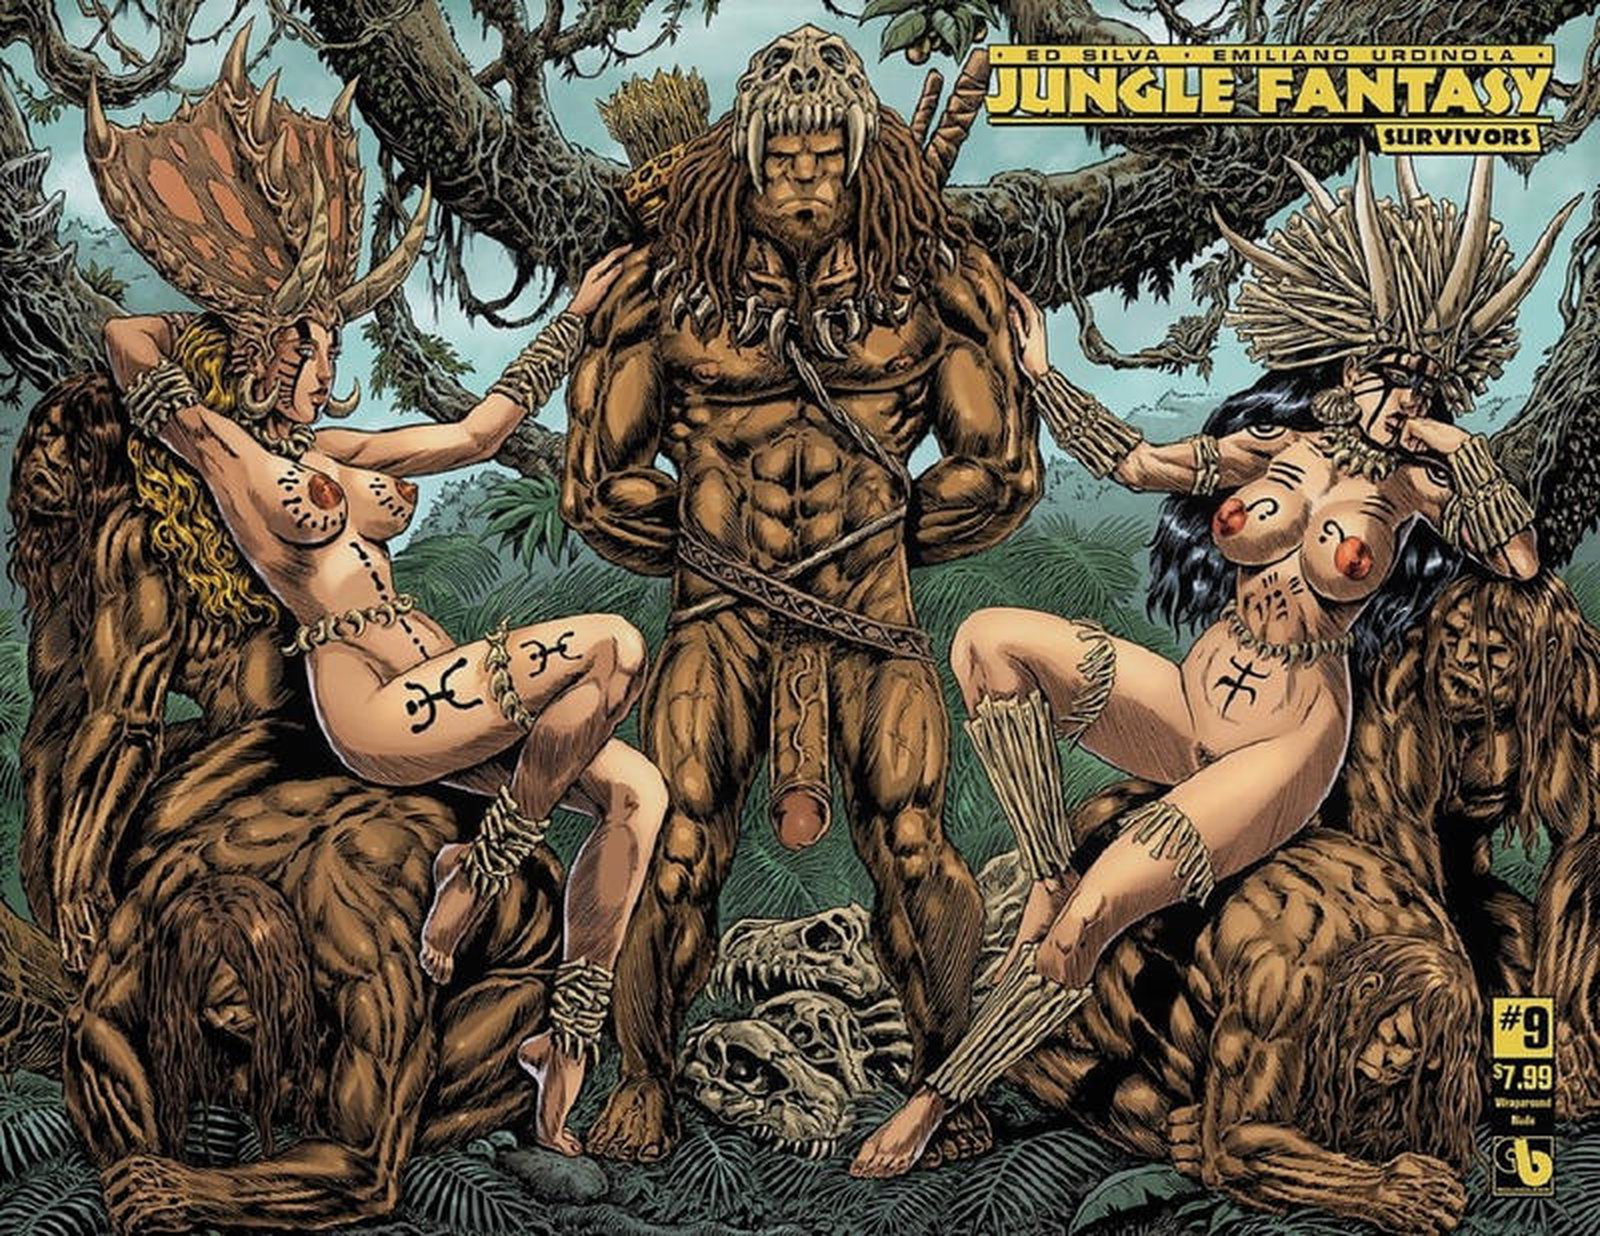 Jungle Fantasy: Survivors #9